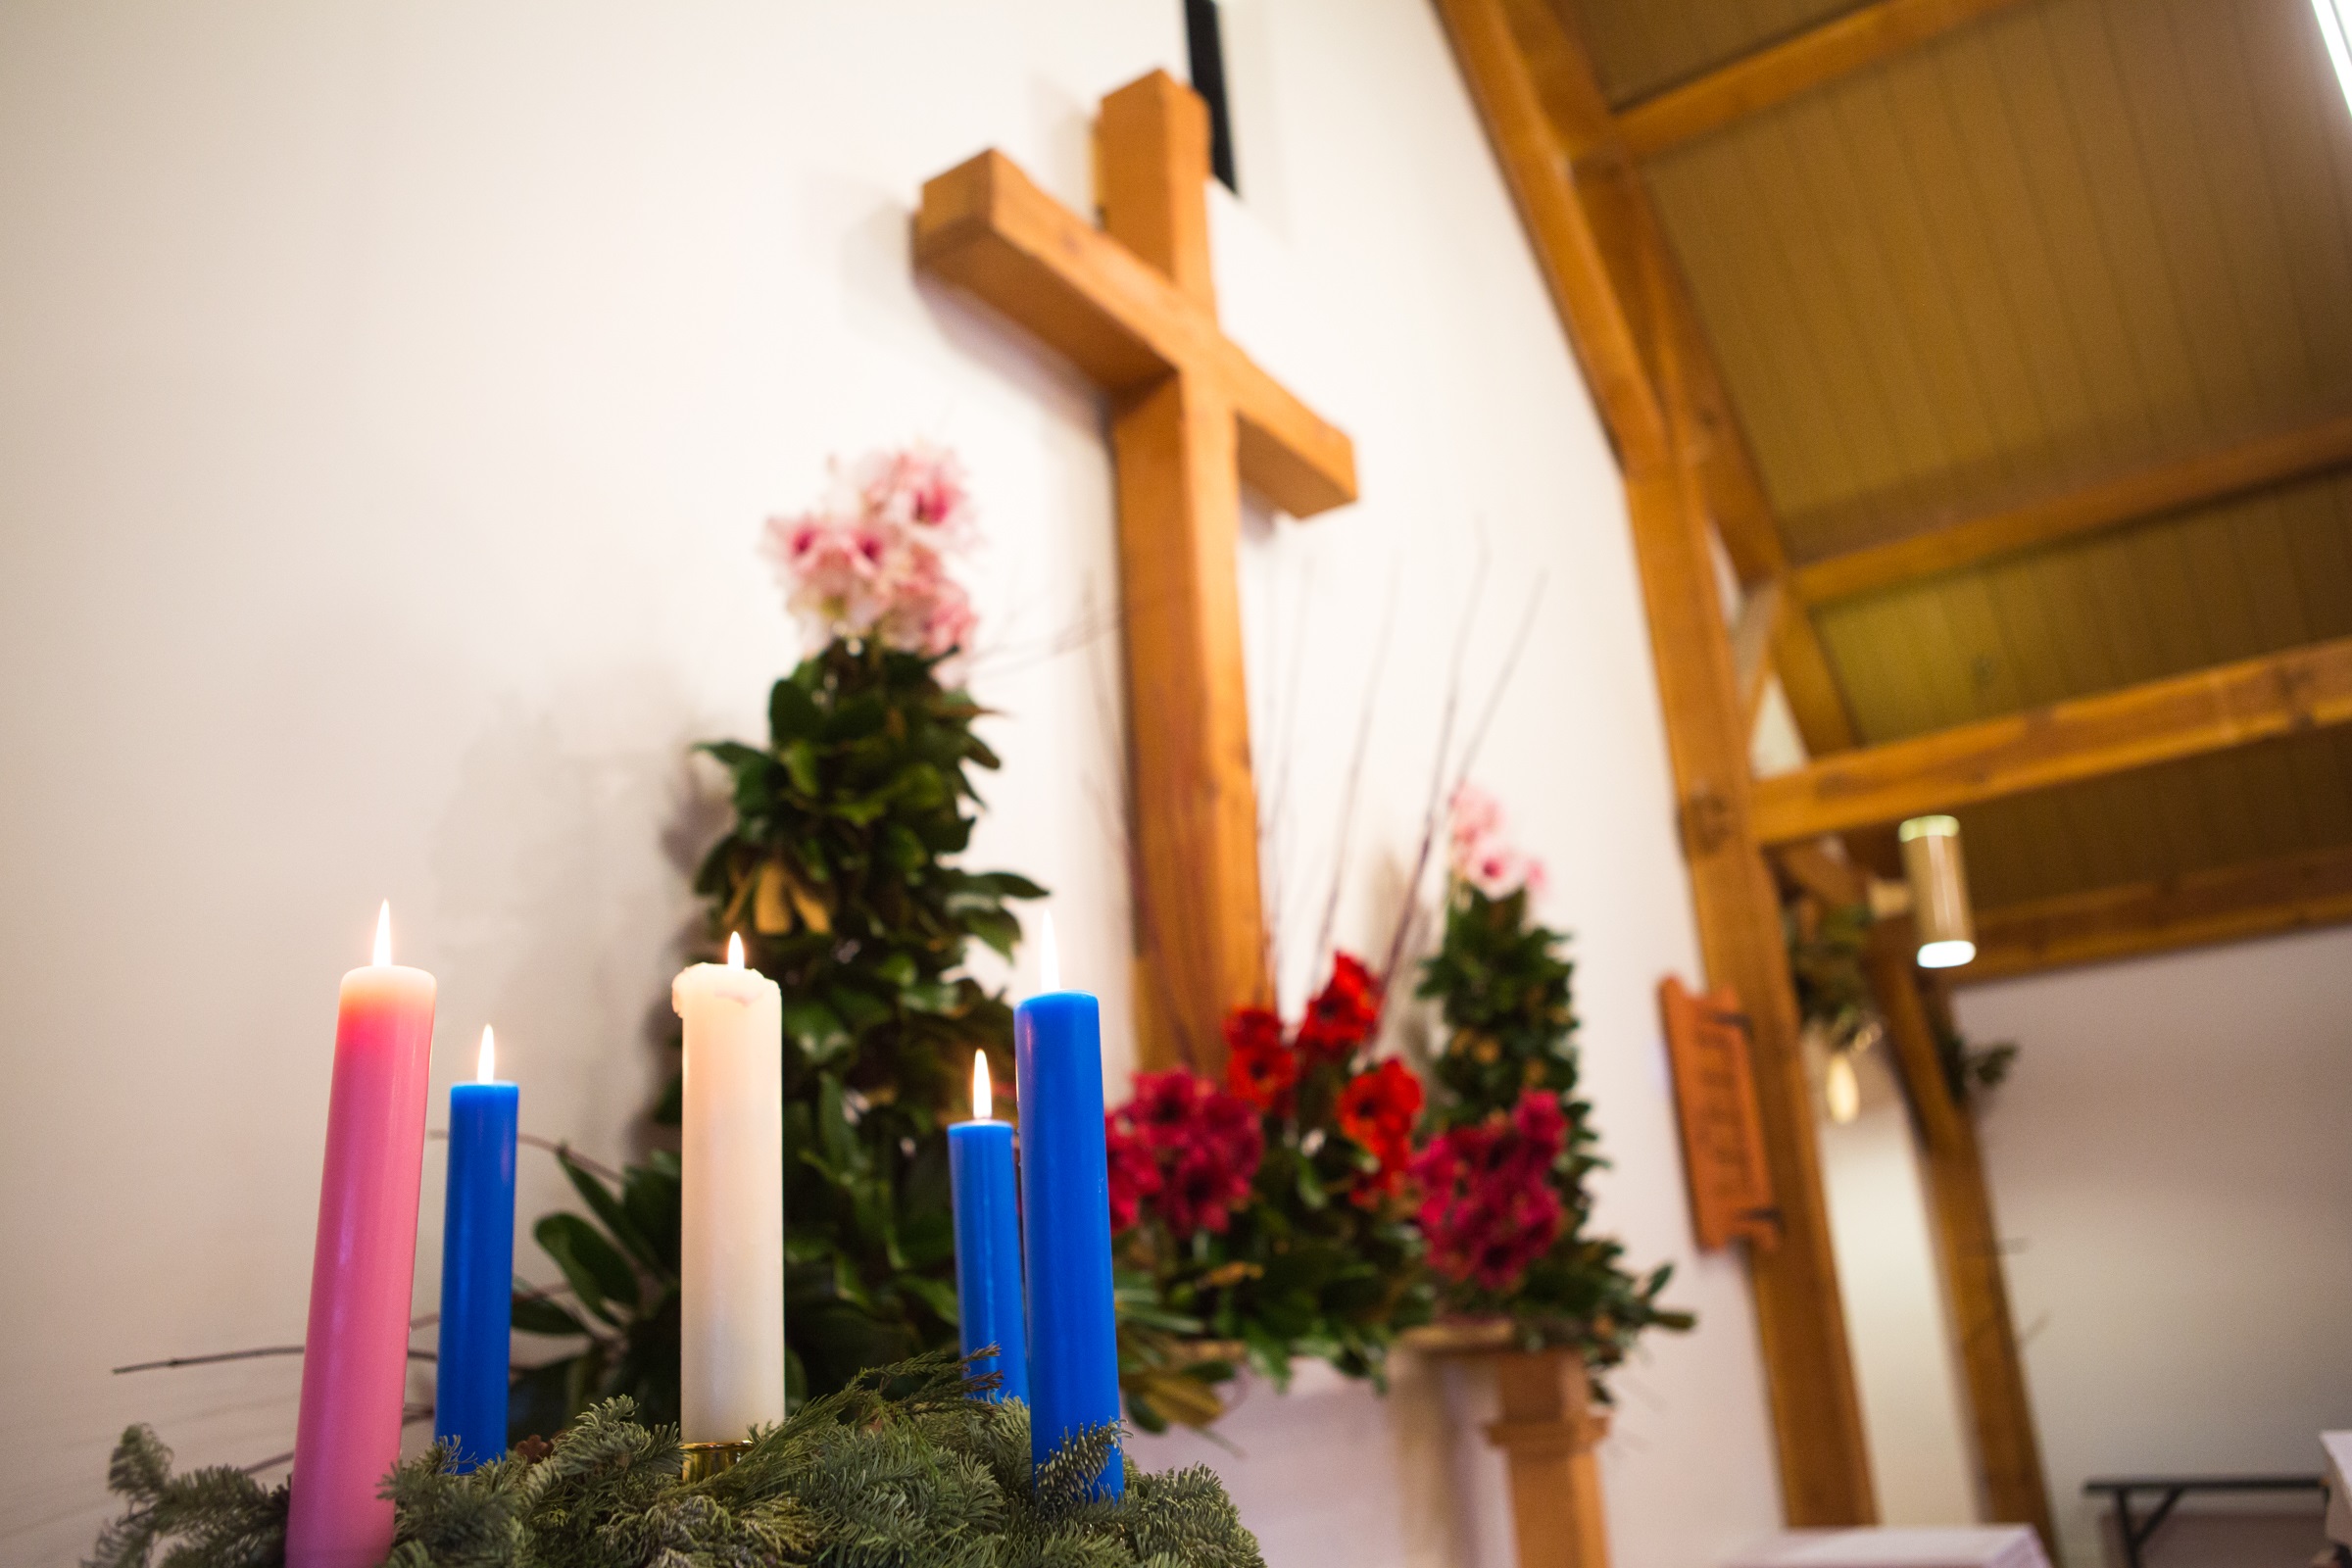 The 4th Sunday of Advent – The Rev. Abigail Crozier Nestlehutt